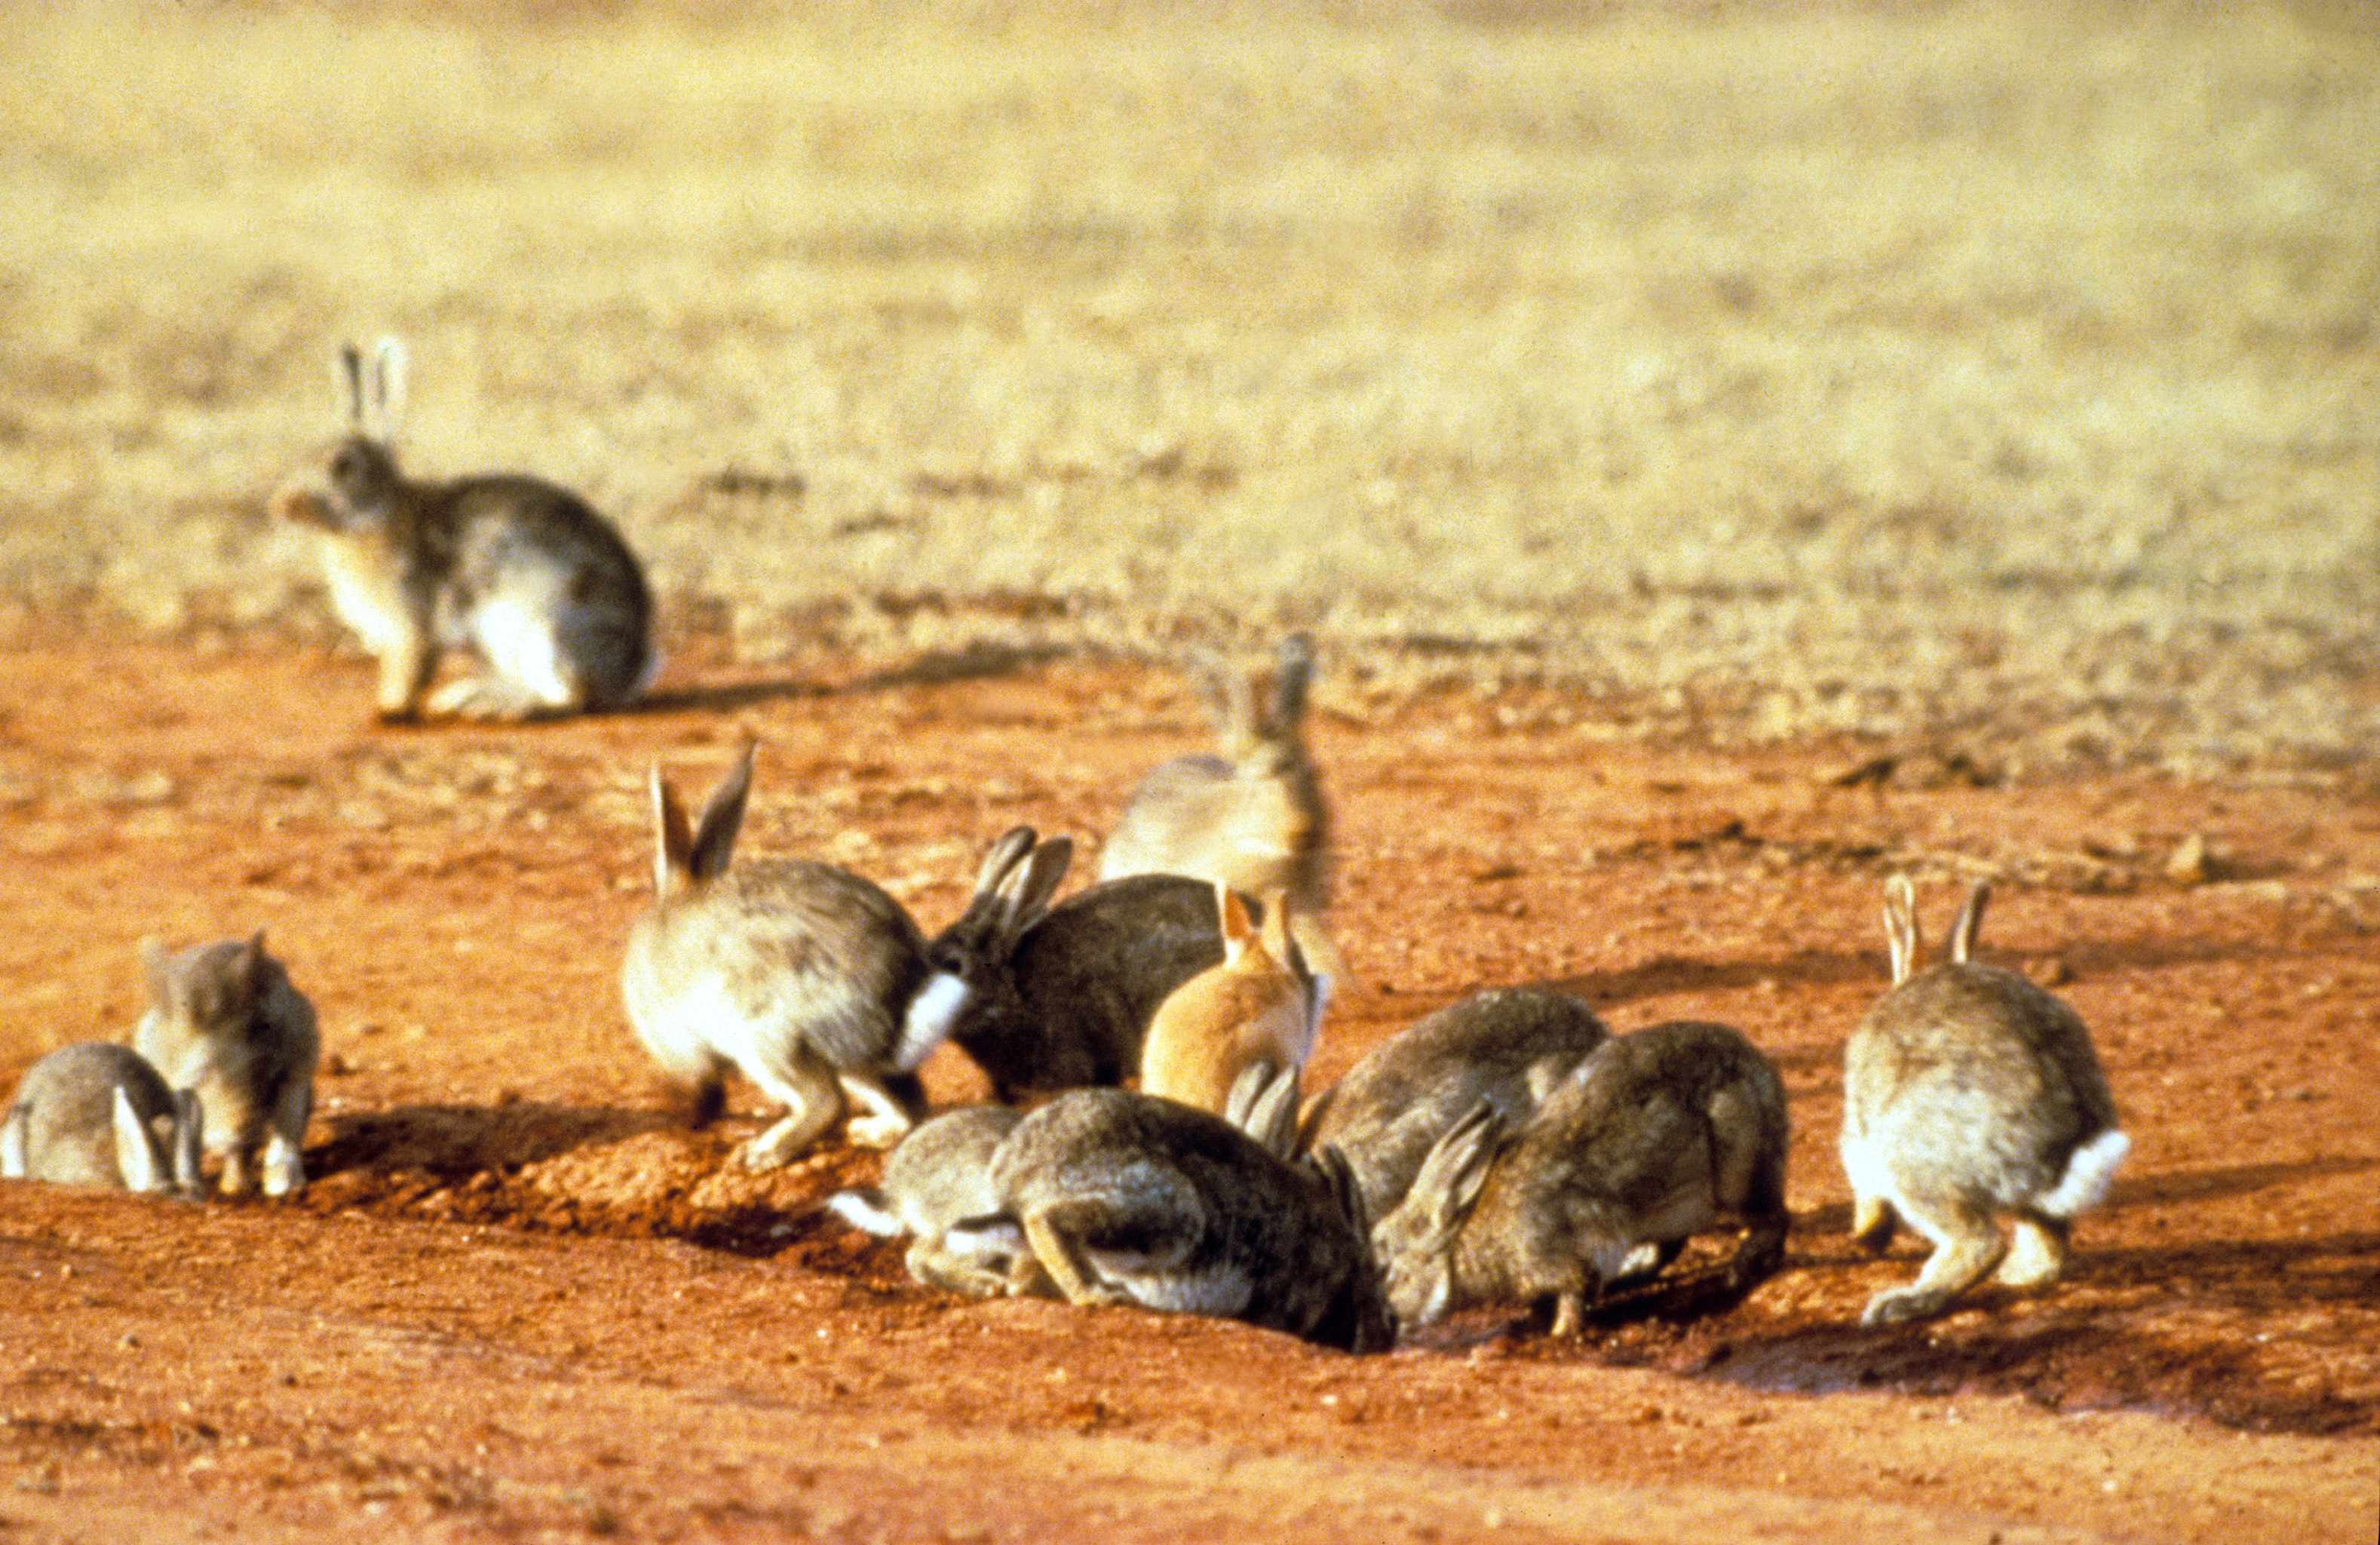 File:CSIRO ScienceImage 453 European Rabbits.jpg - Wikimedia Commons